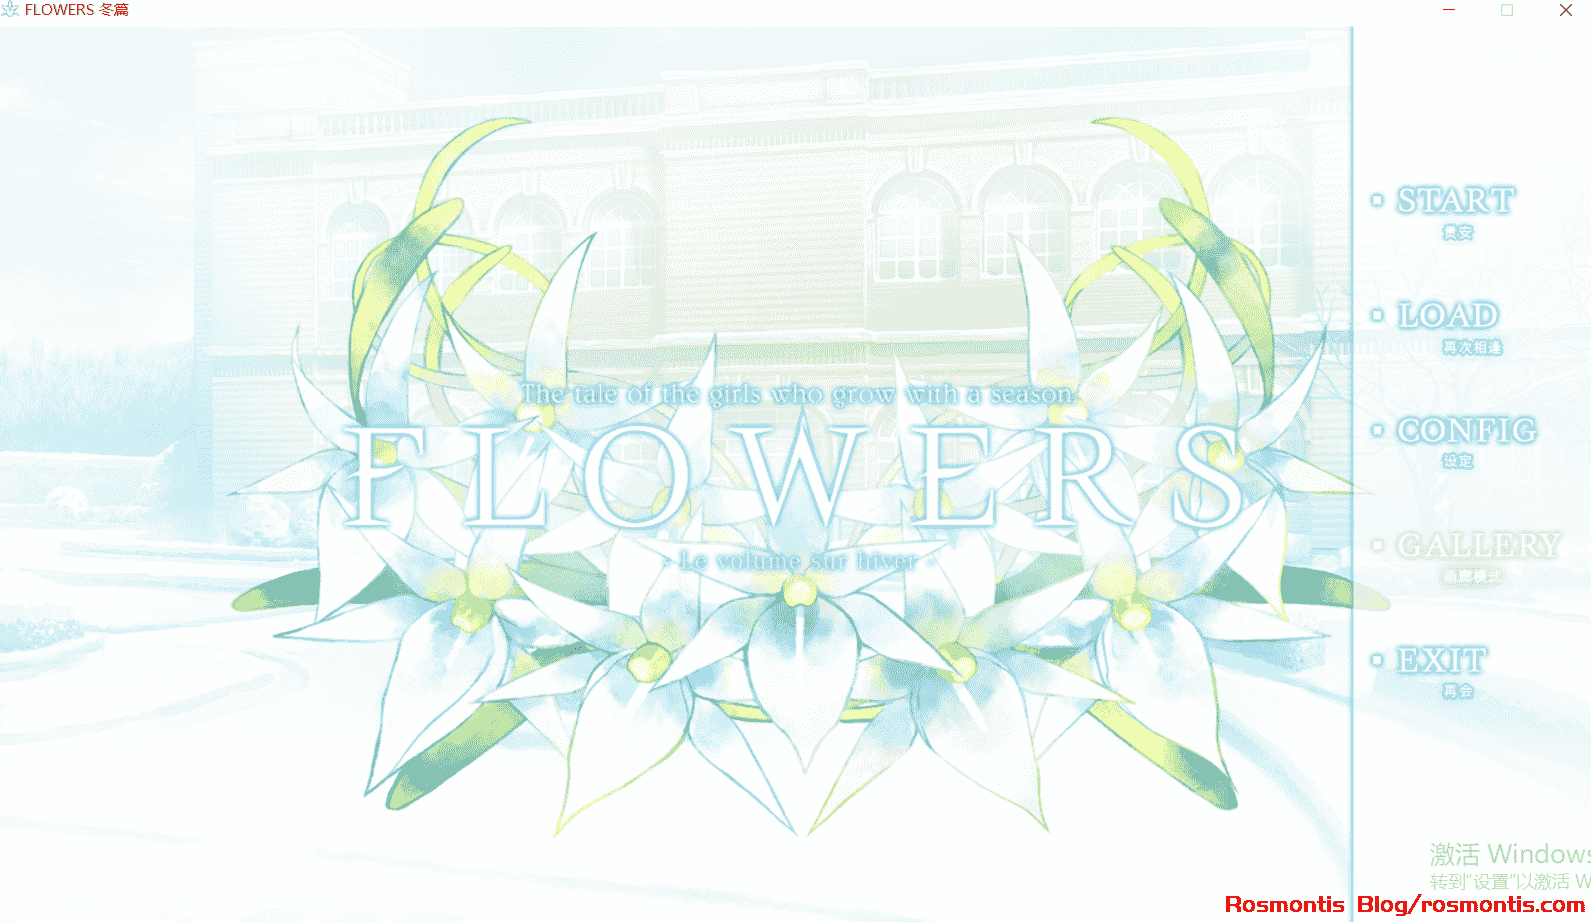 FLOWERS系列】FLOWERS冬篇FLOWERS -Le volume sur hiver- 完整汉化